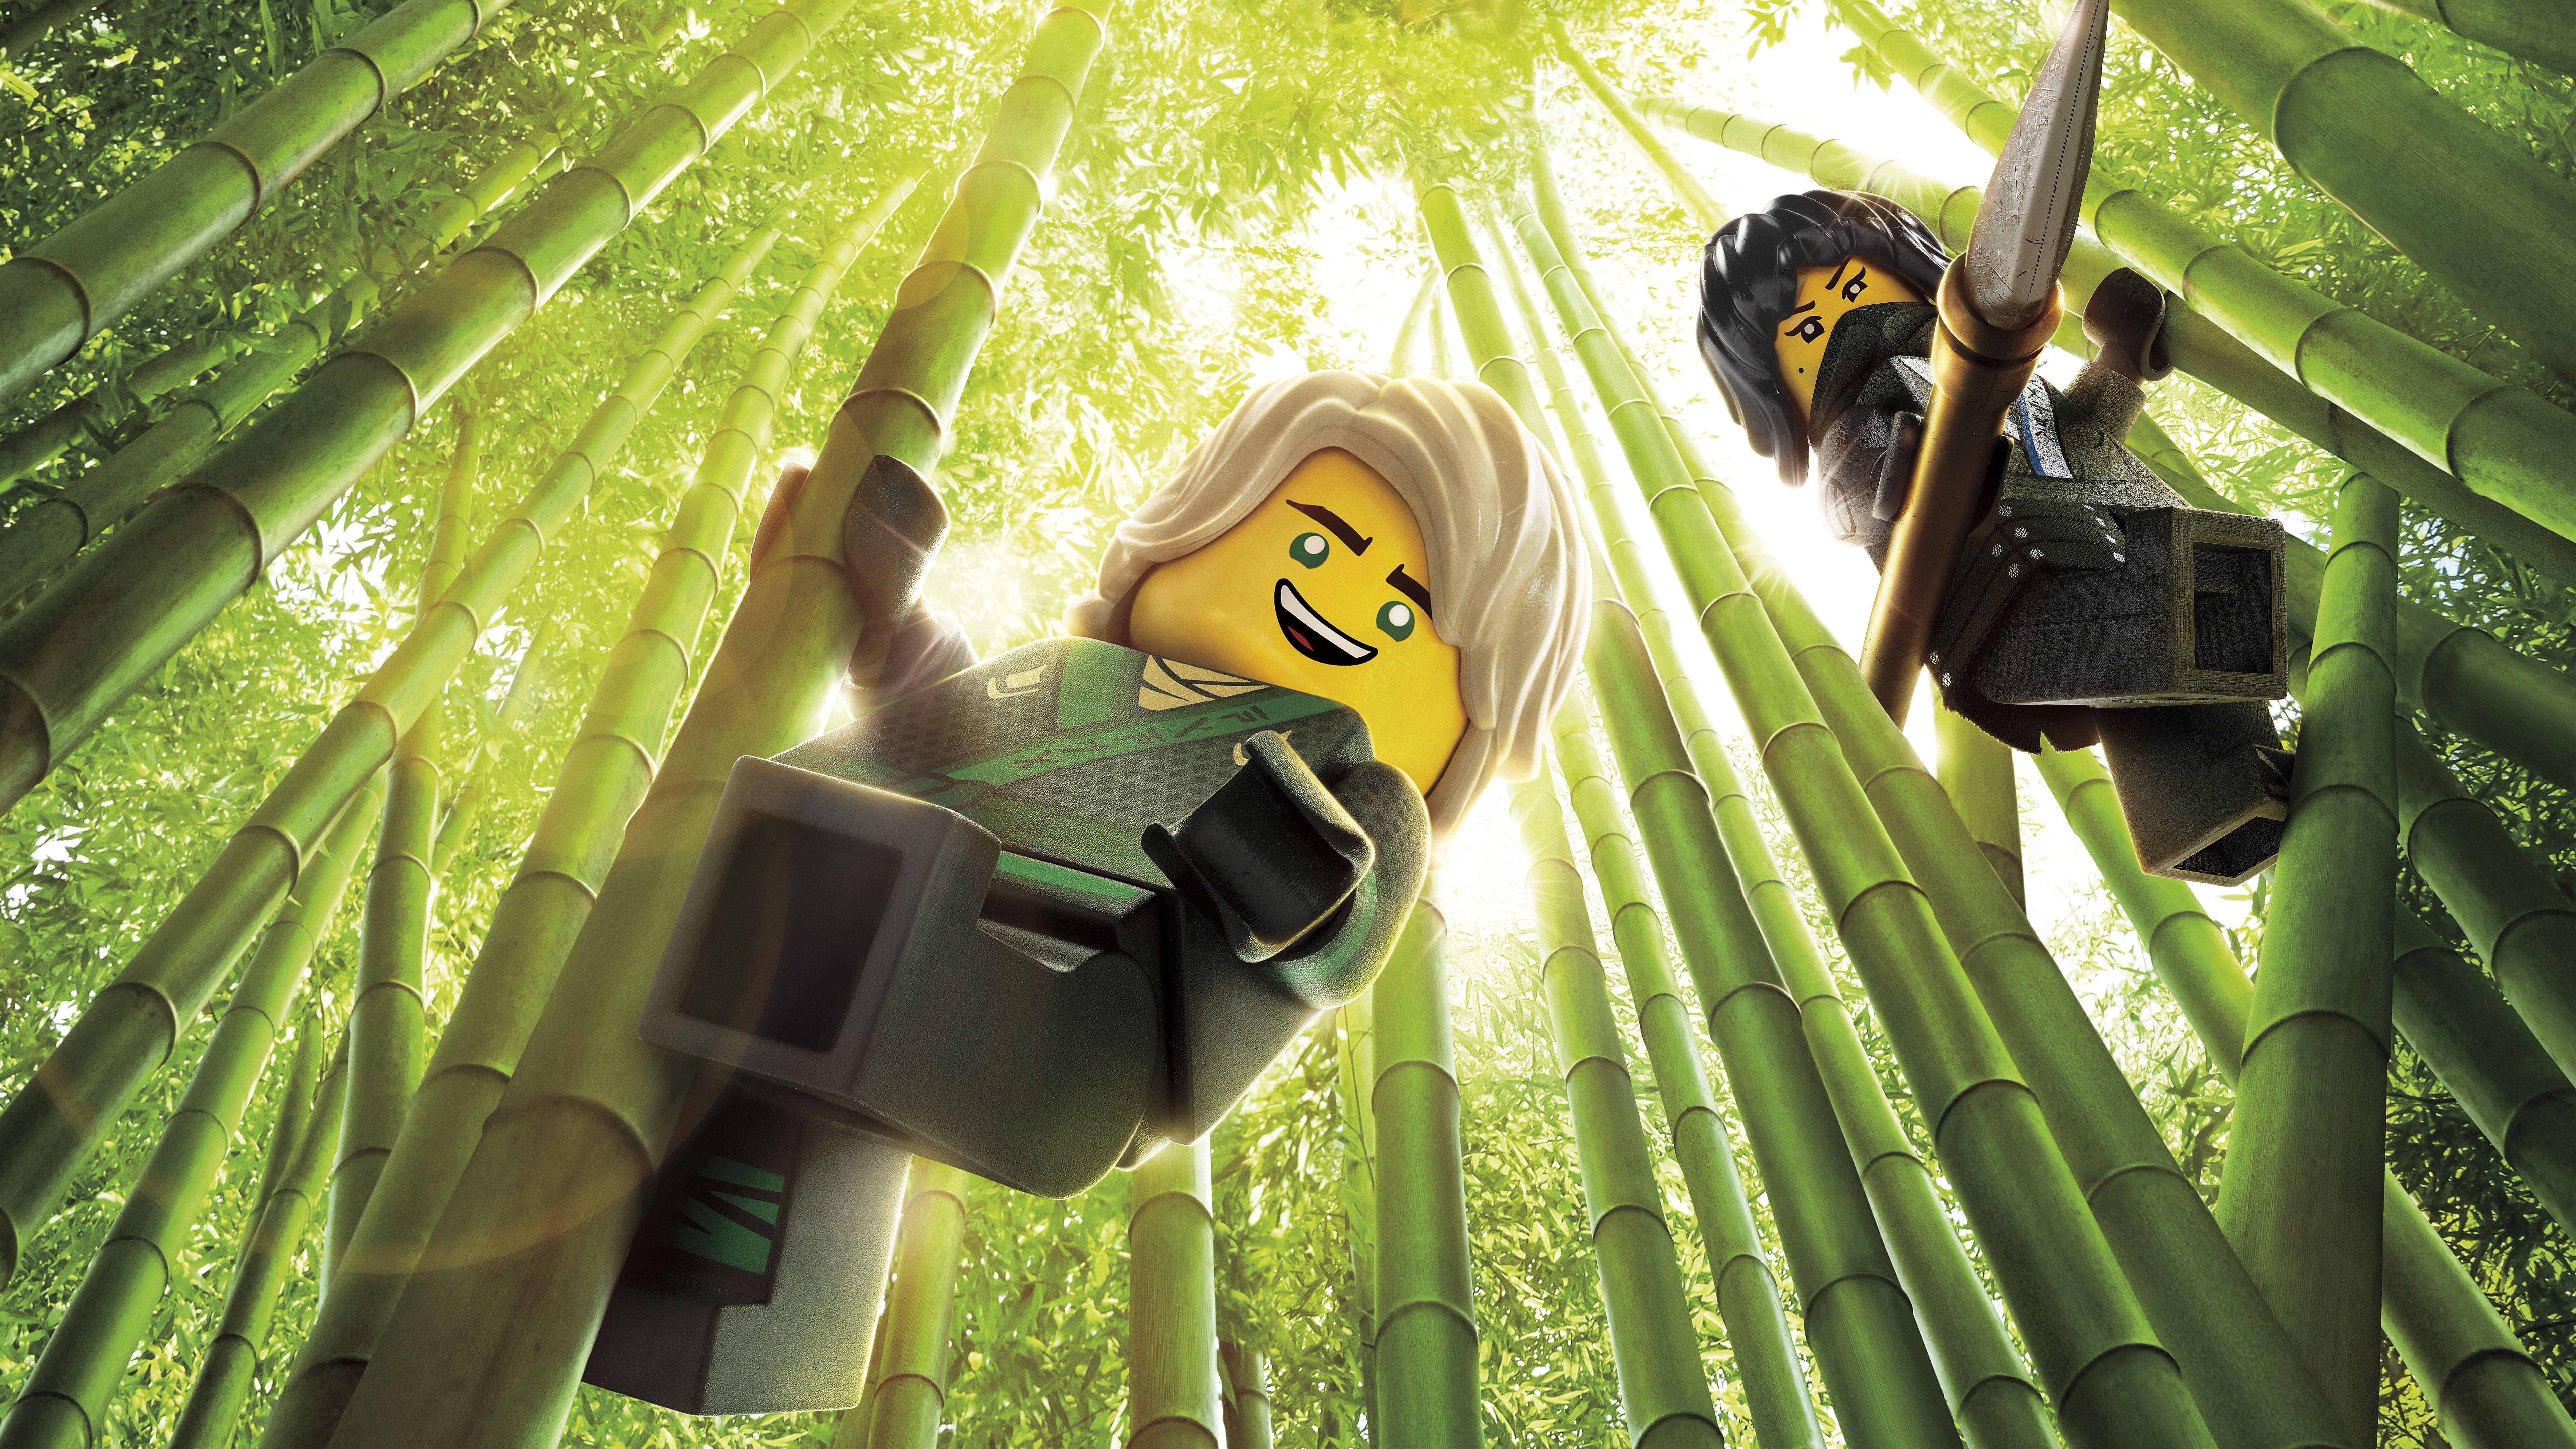 LEGO Ninjago Movie Minifigure - Nya with Blue Ninja Armor and Hair - wide 4